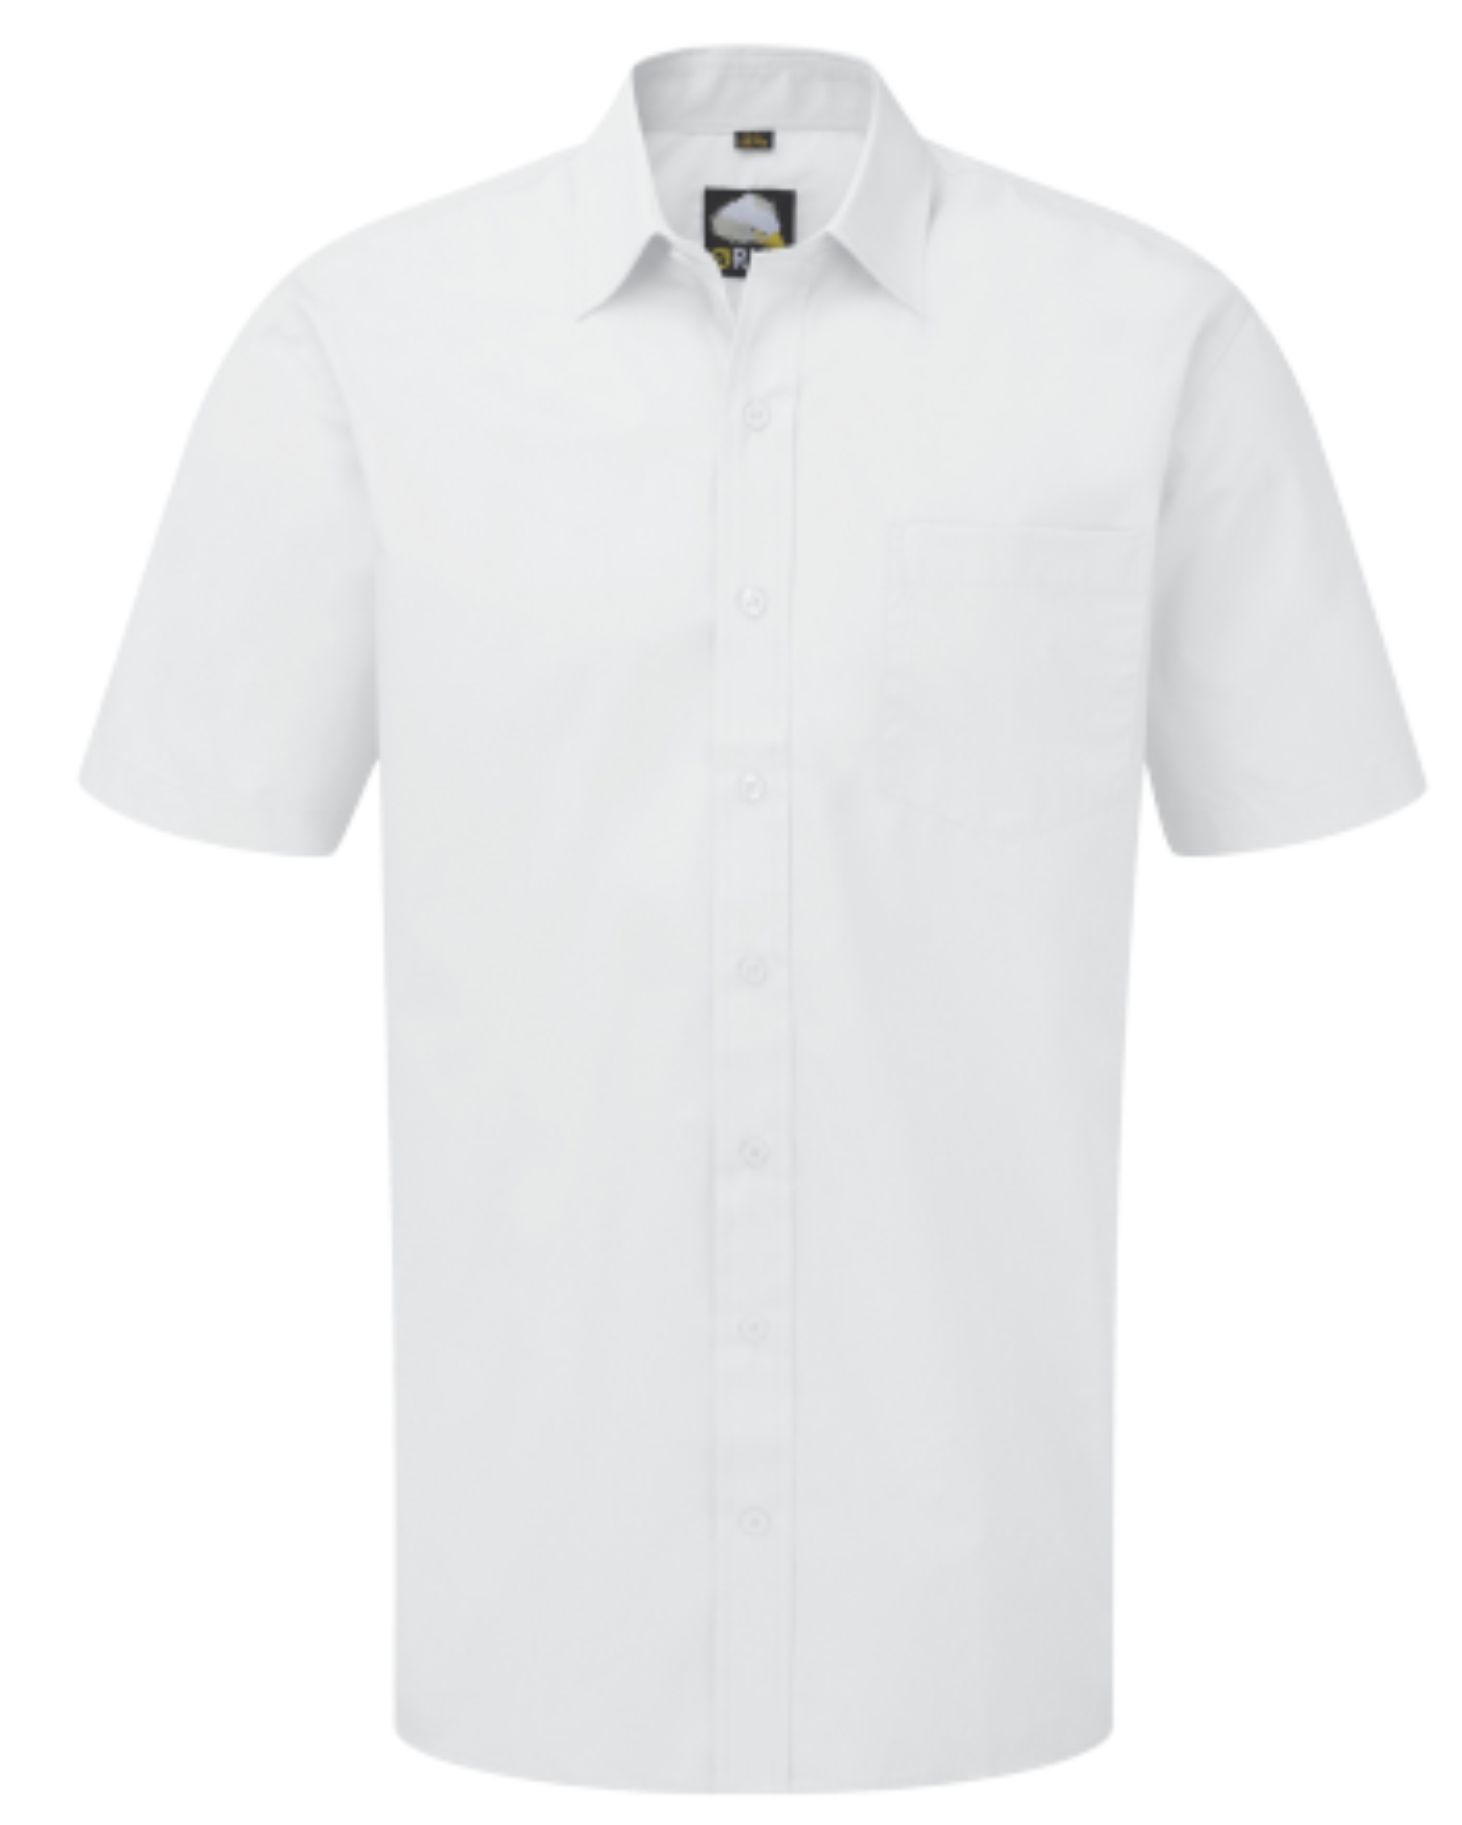 Orn 5300 Manchester Short Sleeve Premium Shirt